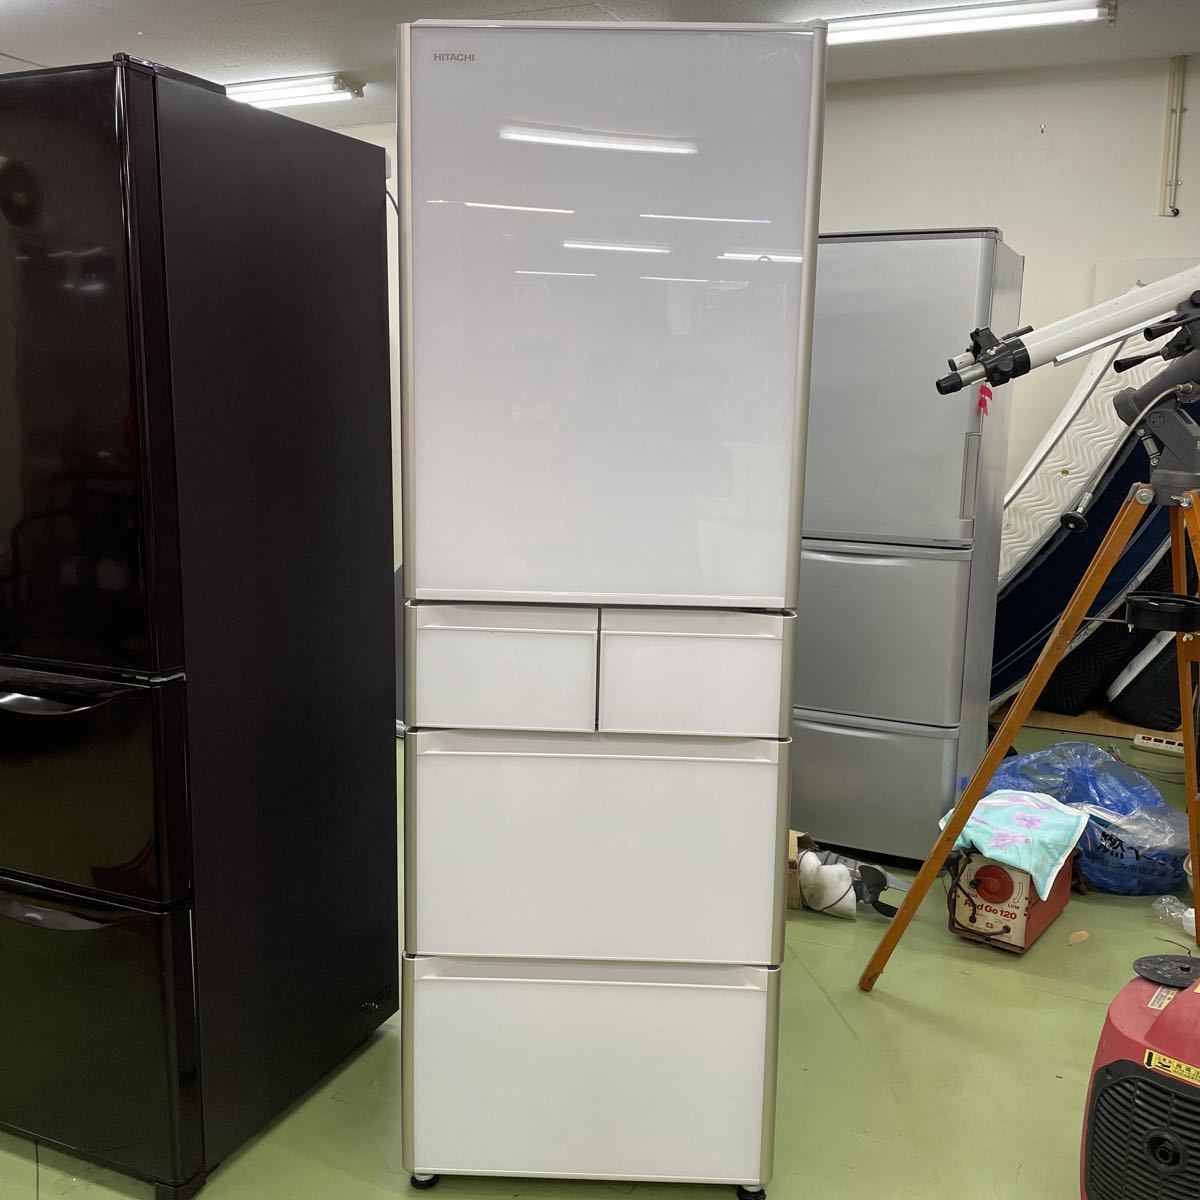 RE 日立ノンフロン冷凍冷蔵庫 R-S4000H(xw)型 冷凍冷蔵庫 ドア 冷蔵庫